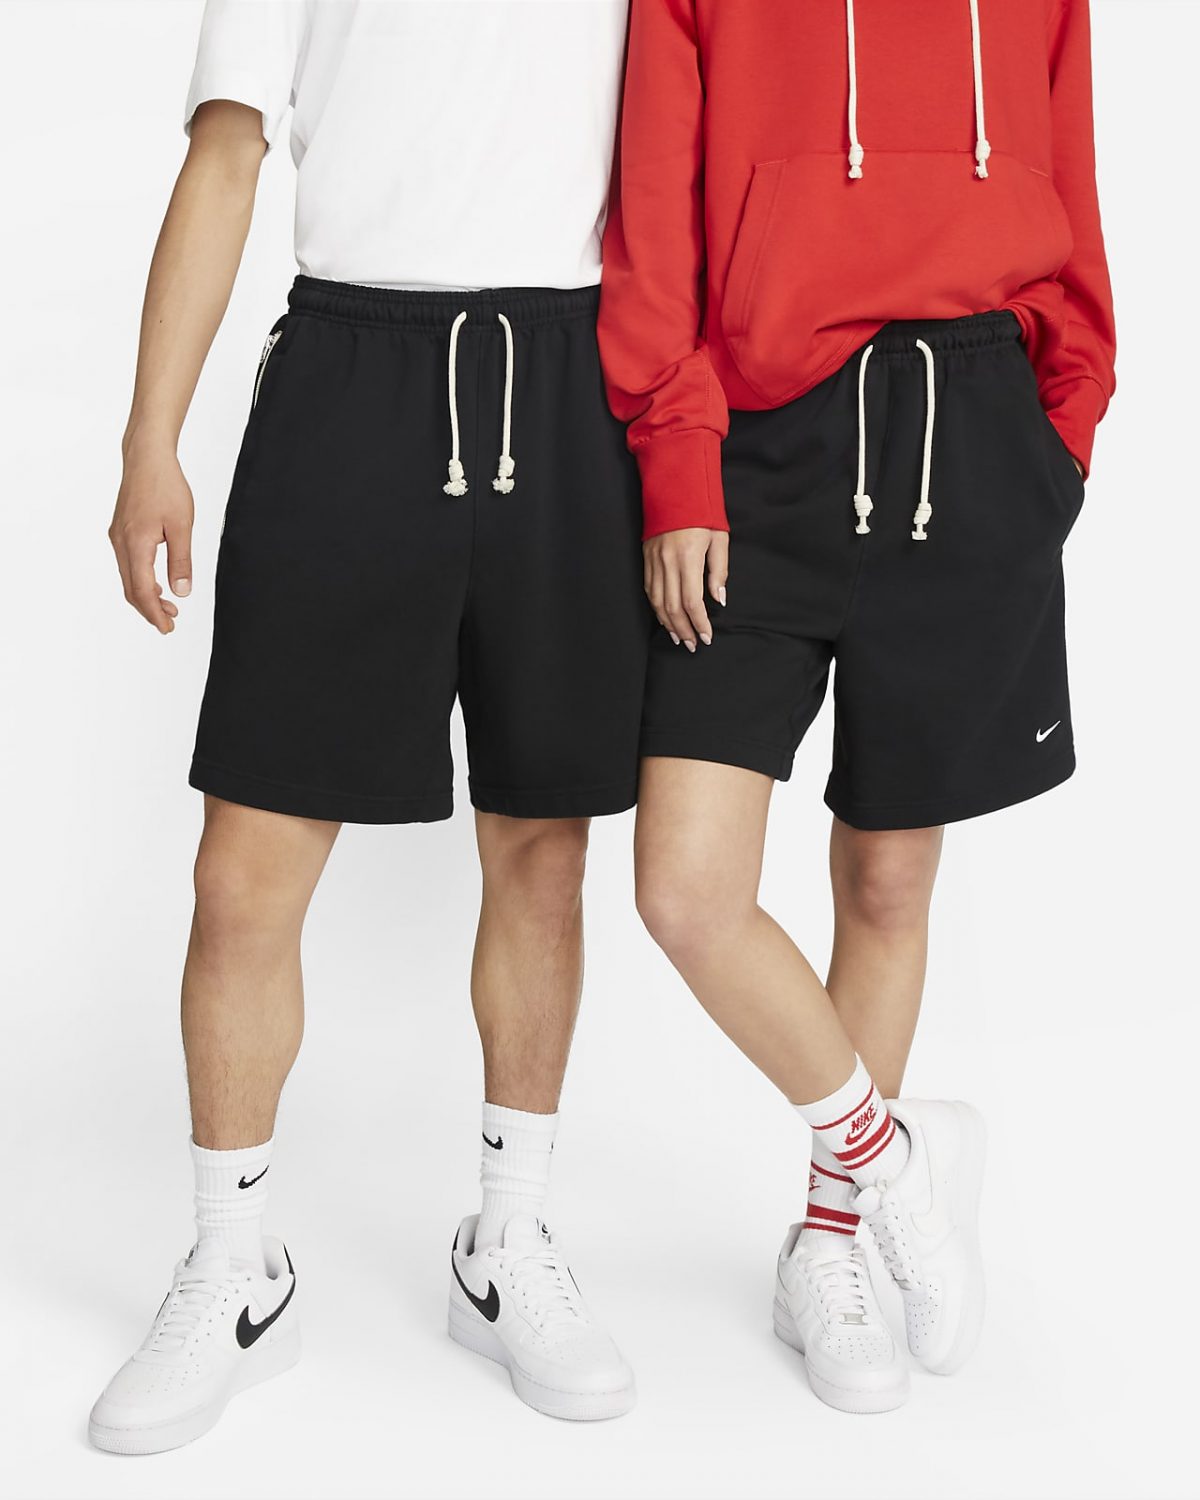 Мужские шорты Nike Dri-FIT Standard Issue фото